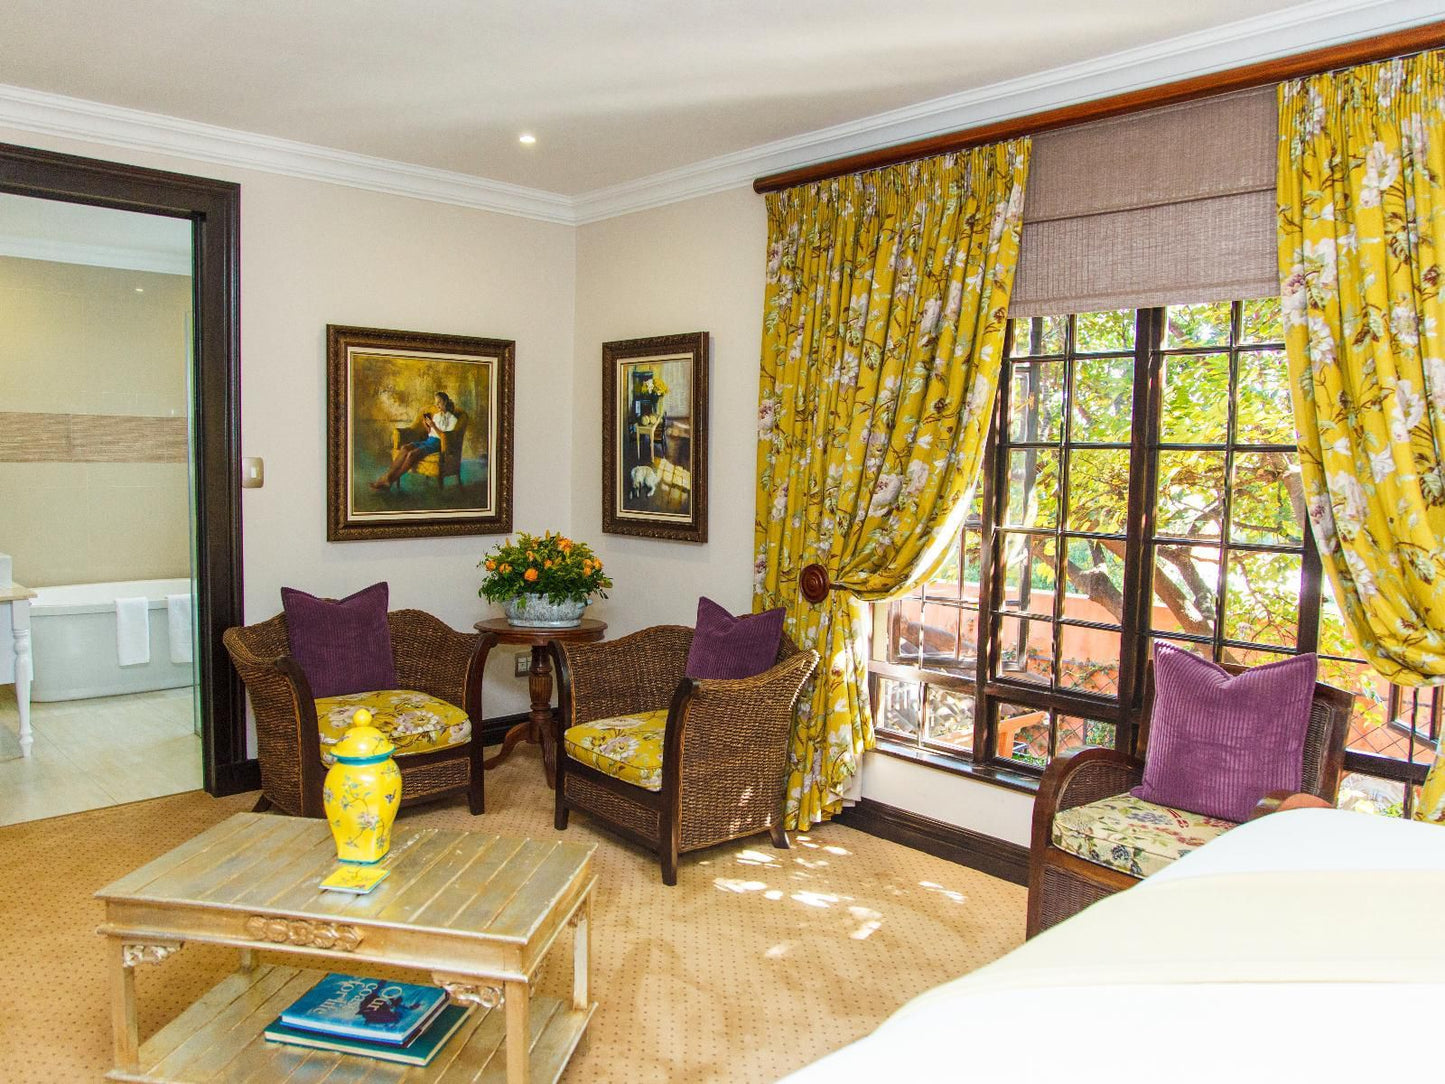 Ivory Manor Boutique Hotel Rietvalleipark Pretoria Tshwane Gauteng South Africa Living Room